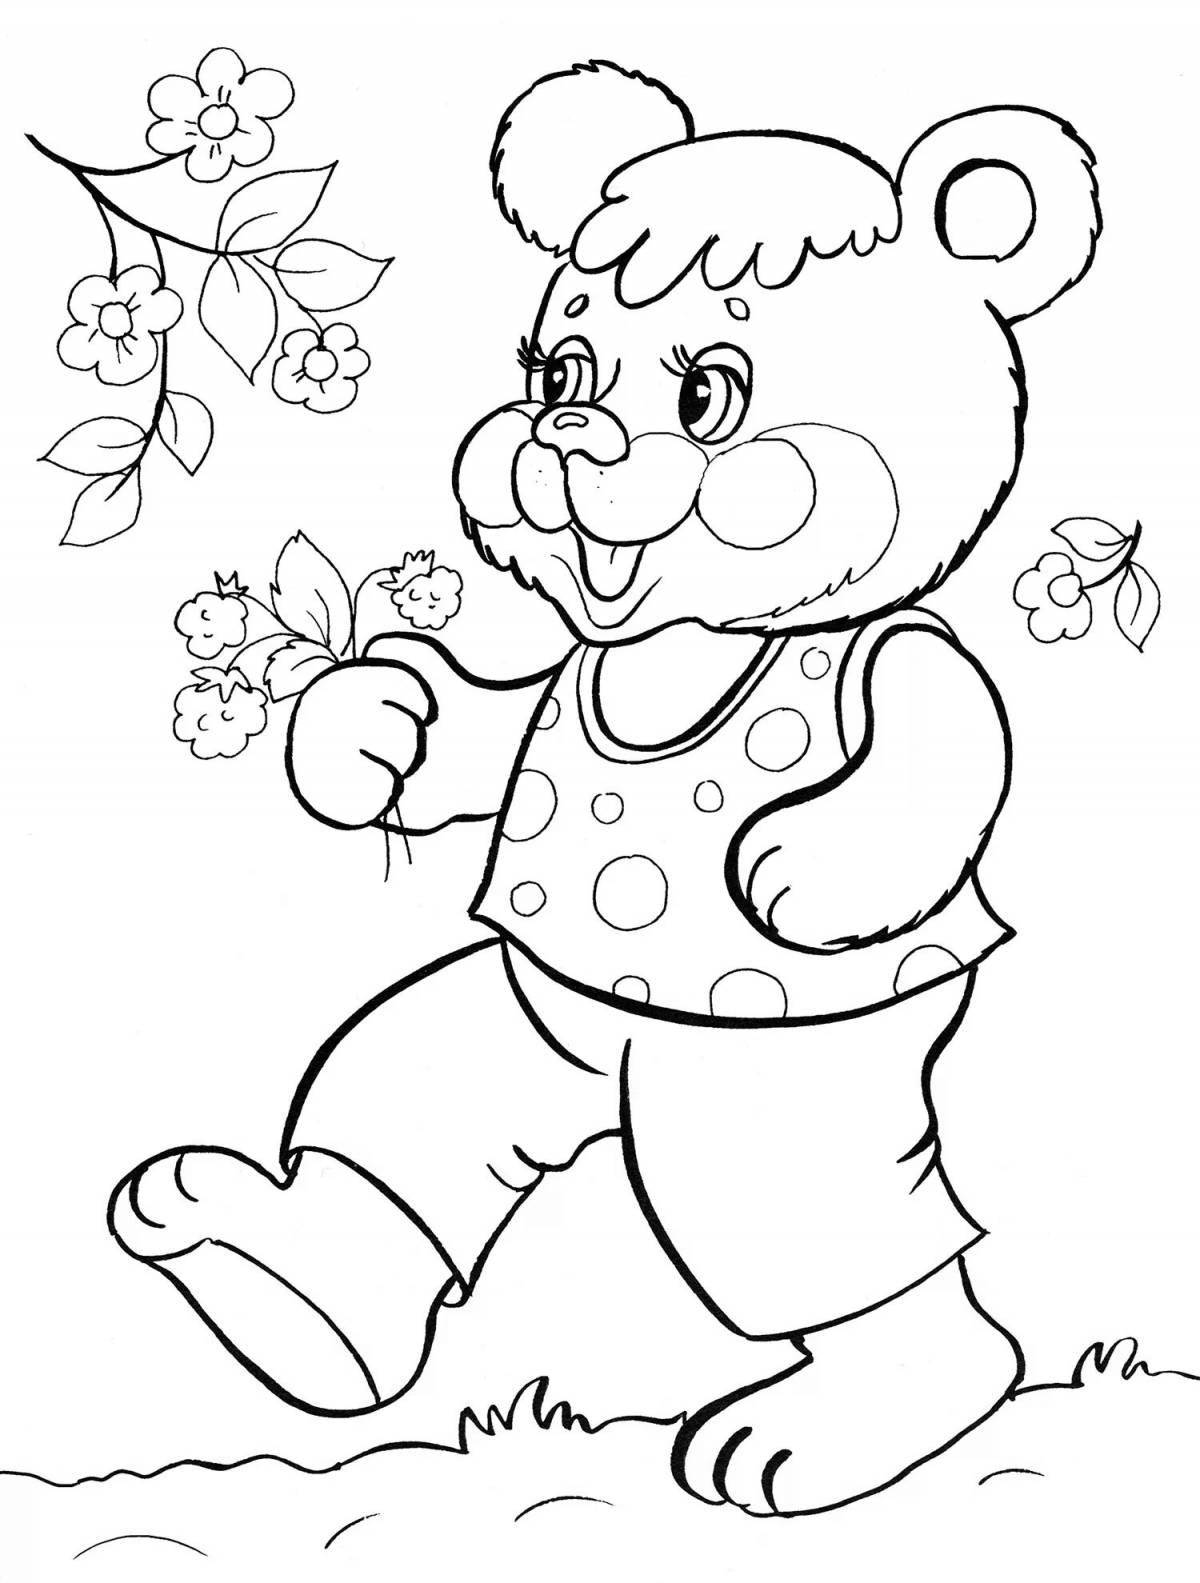 Delightful teremok bear coloring book